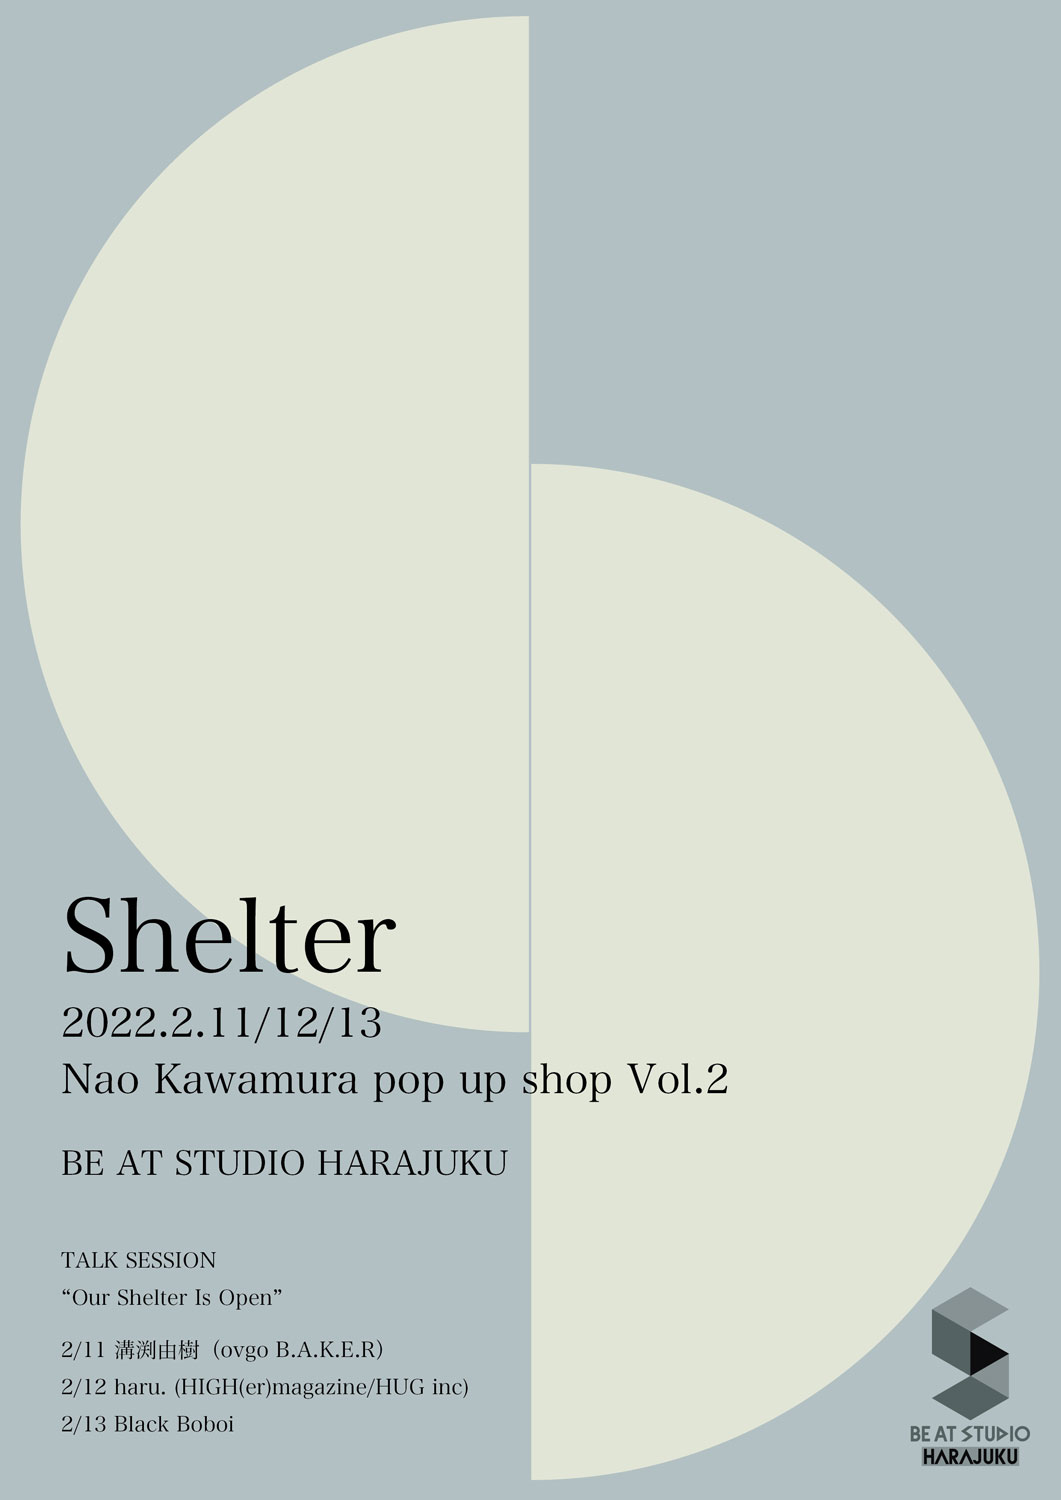 「Nao Kawamura pop up shop vol.2 "Shelter"」